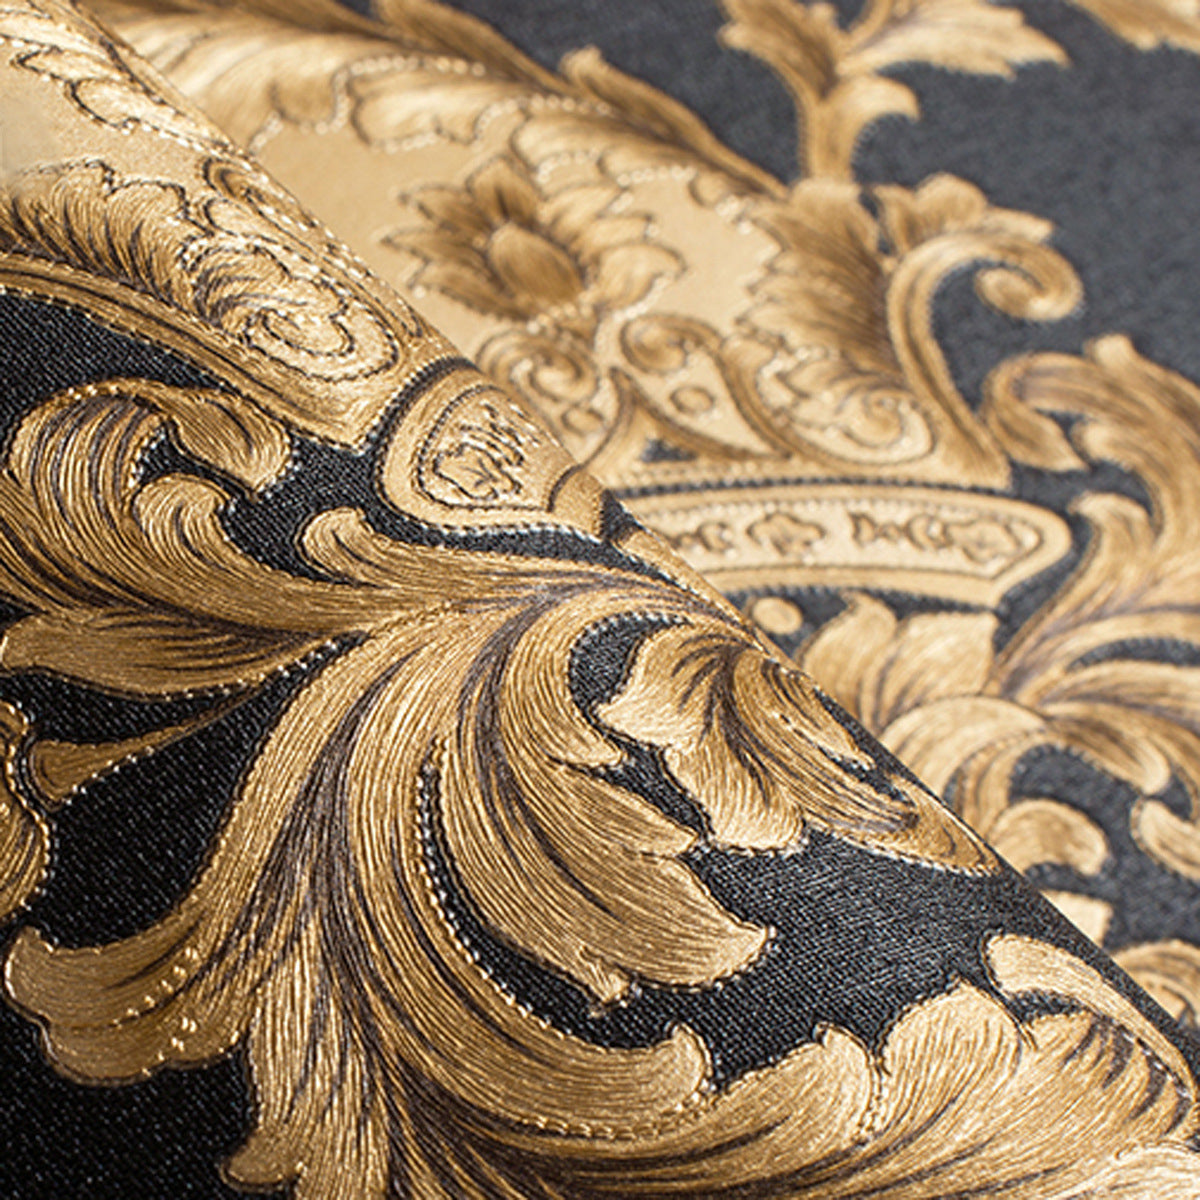 Luxury Embossed Black & Gold Damask Wallpaper Patterned Texture 3D Metallic Vinyl Wall Covering Opulent Interior Decor